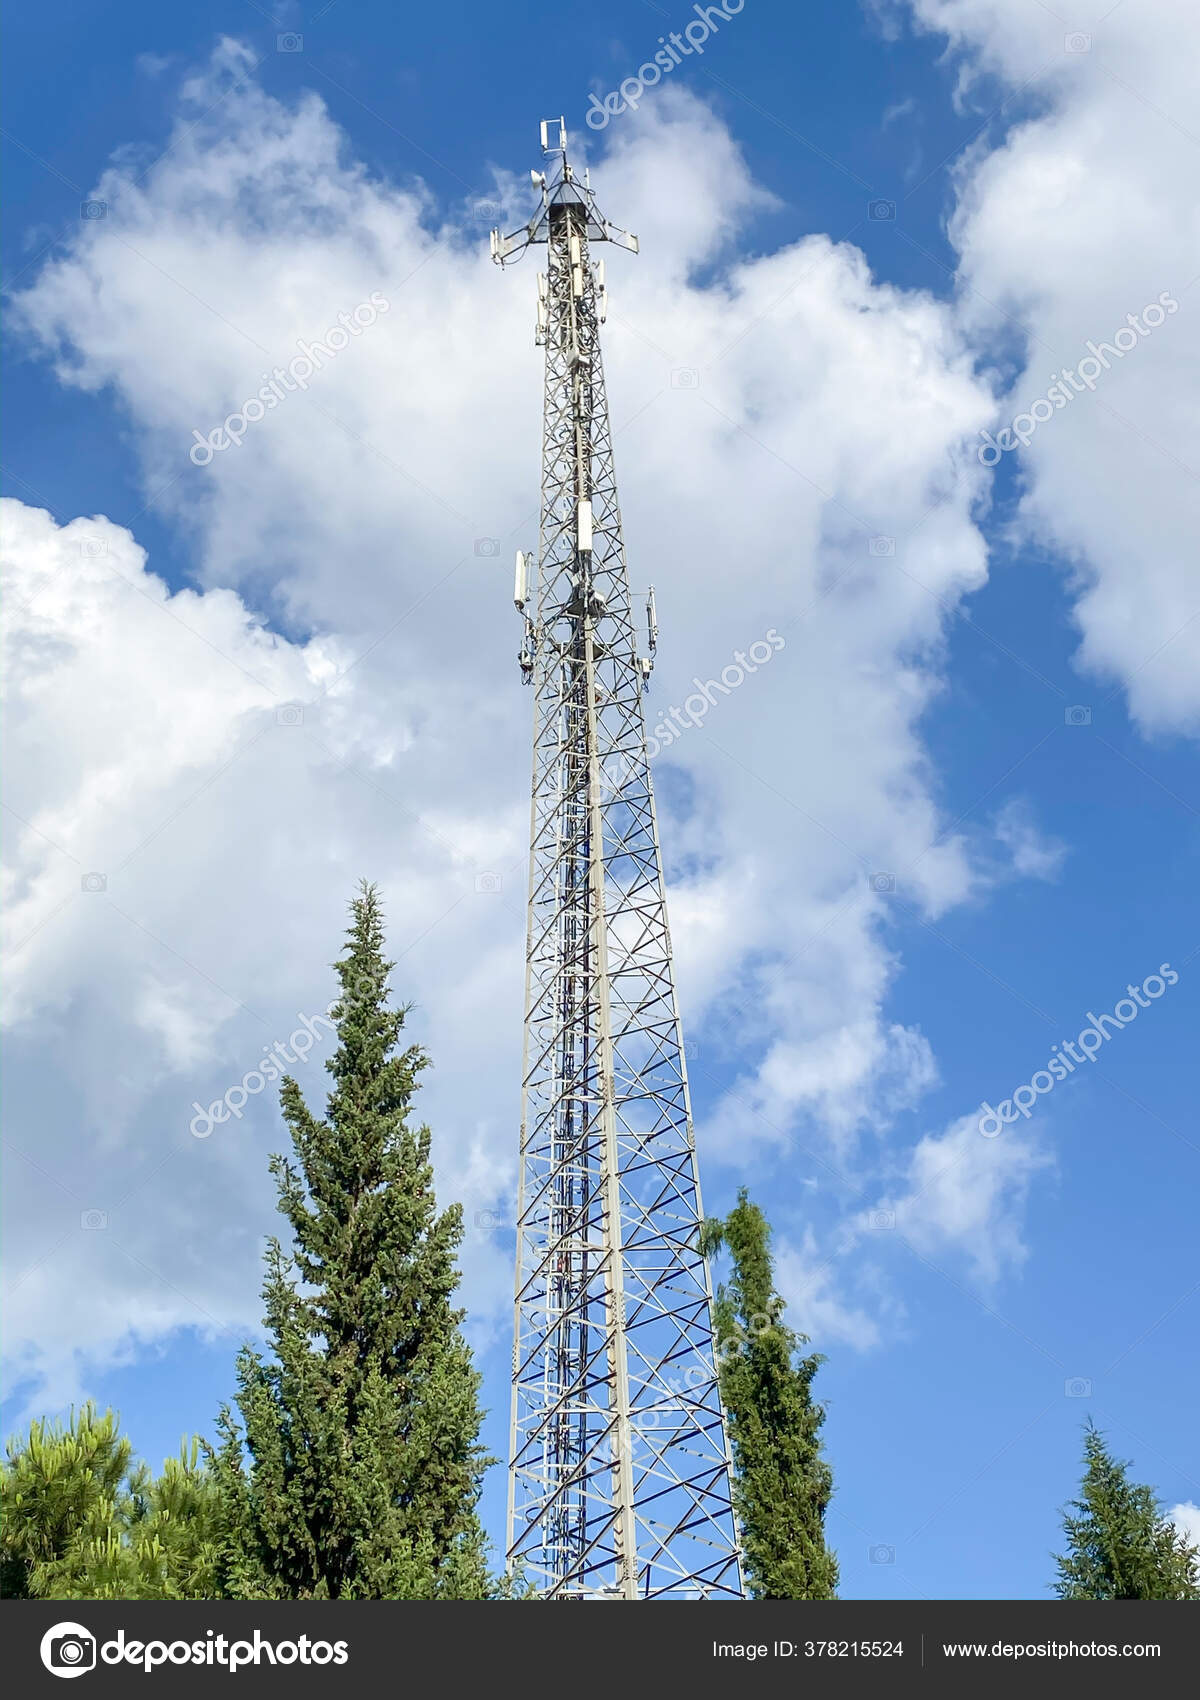 torre de telecomunicaciones de 4g y 5g celular. comunicación de